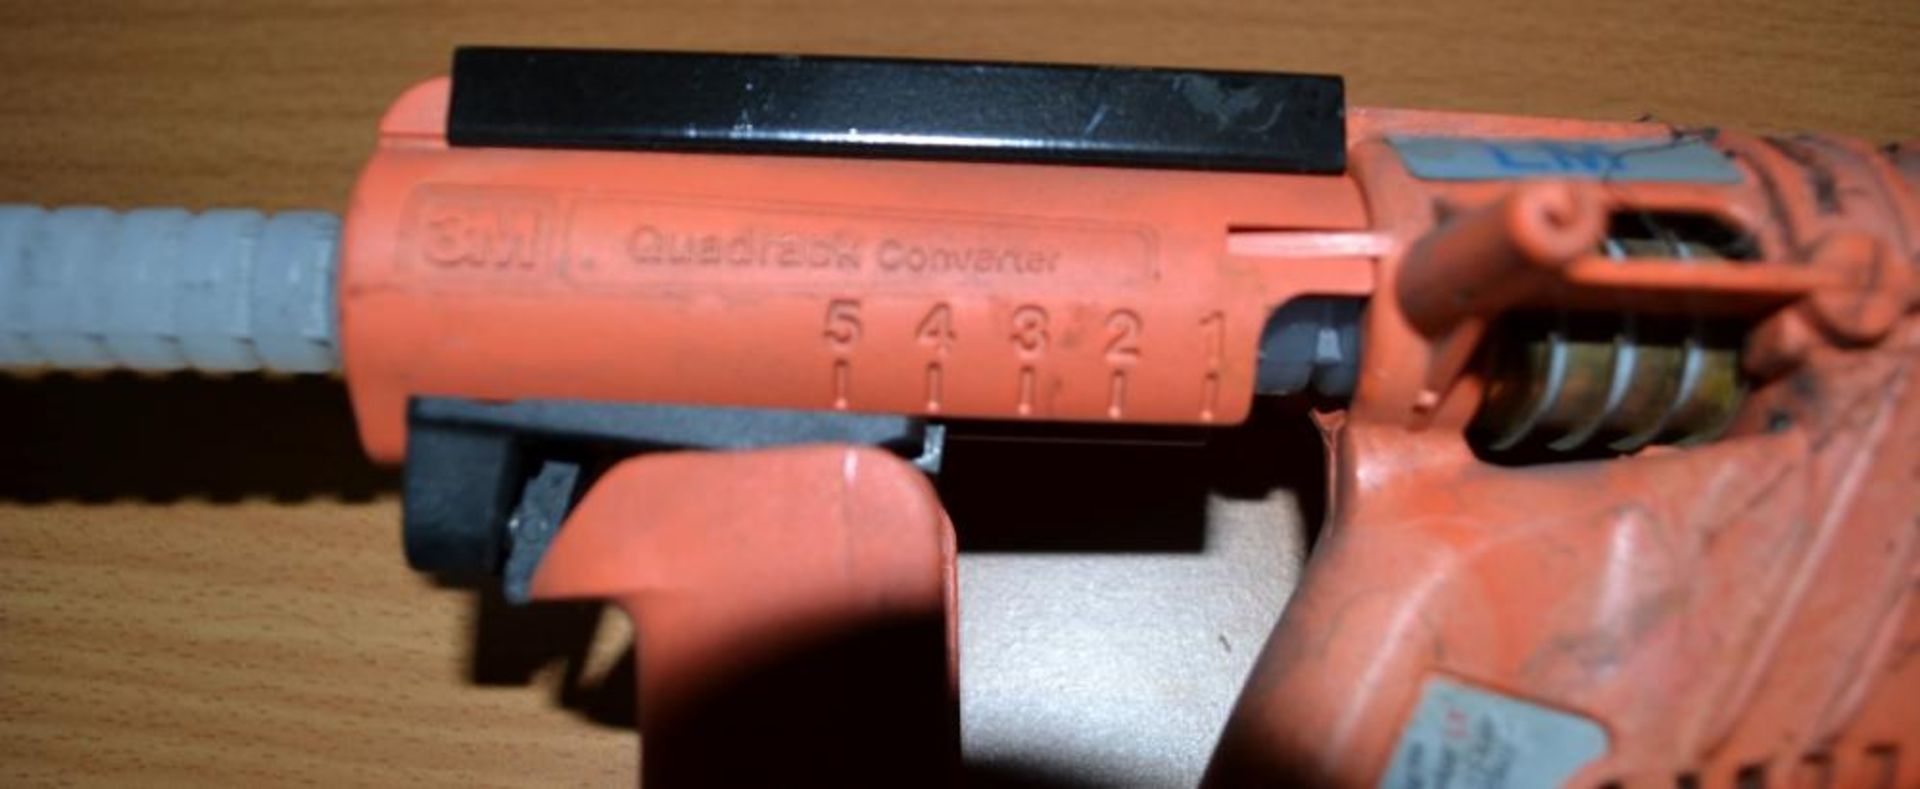 1 x 3M Scotch Weld Hot Melt Applicator with Quadrack Converter and Palm Trigger - CL185 - Ref: - Image 2 of 11